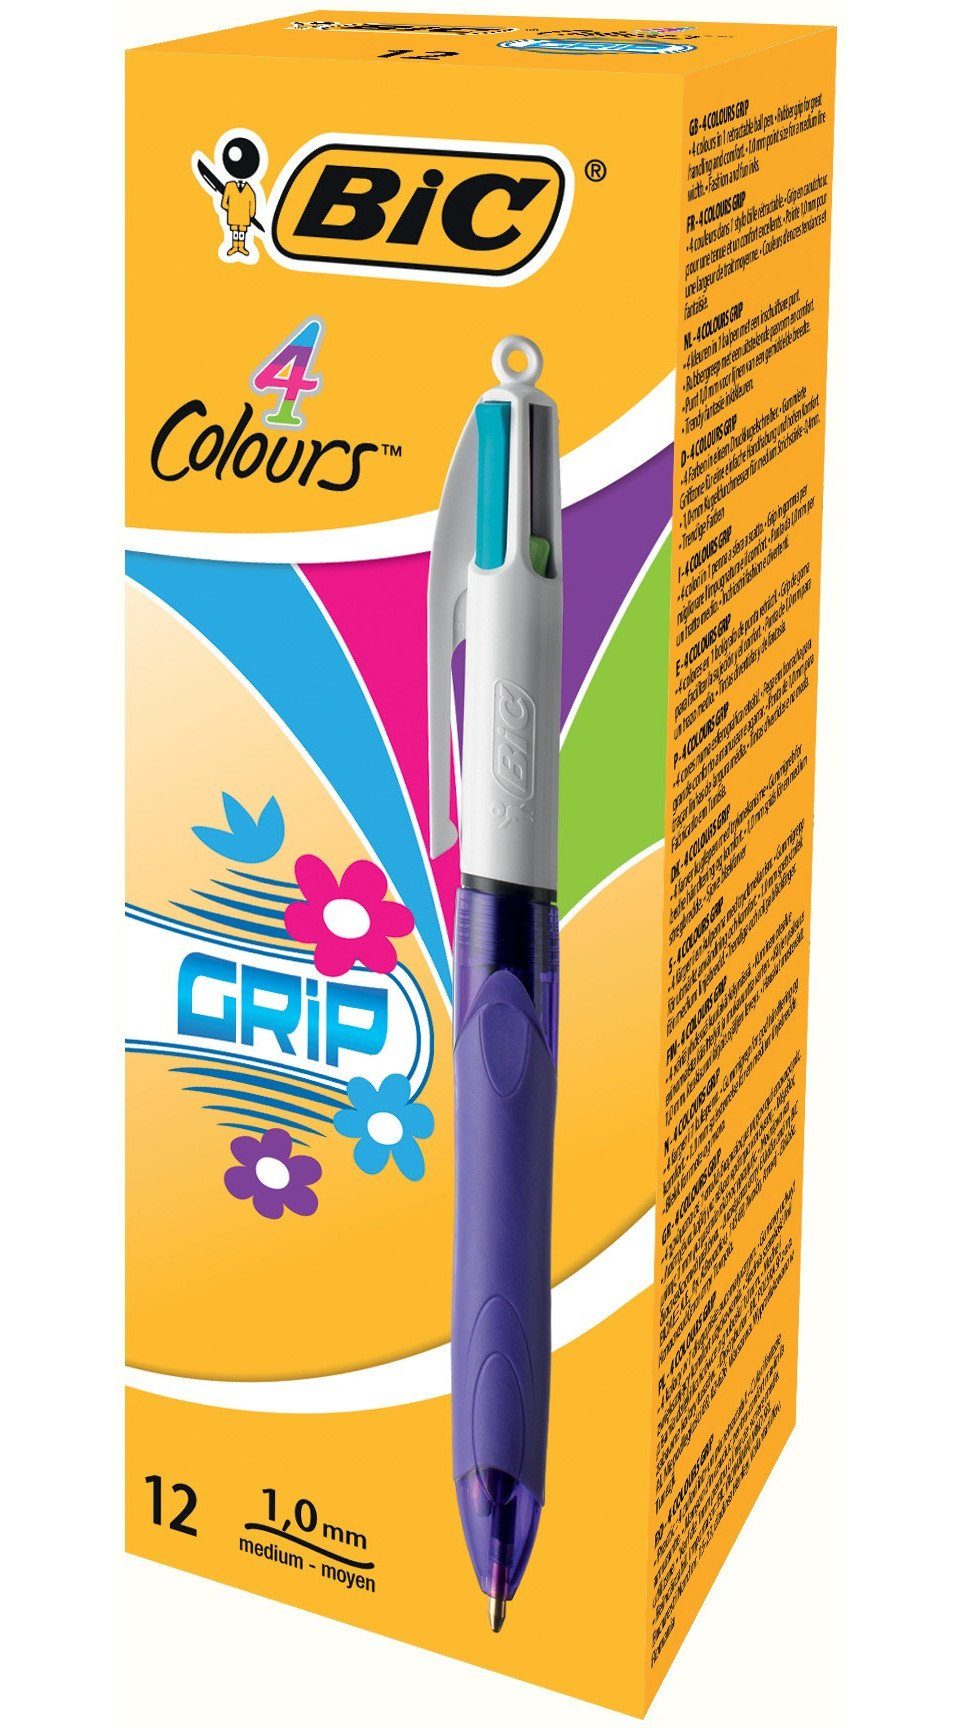 GRIP Colours 4 12er BIC Fashion Kugelschreiber BIC 0.4mm, Set Kugelschreiber